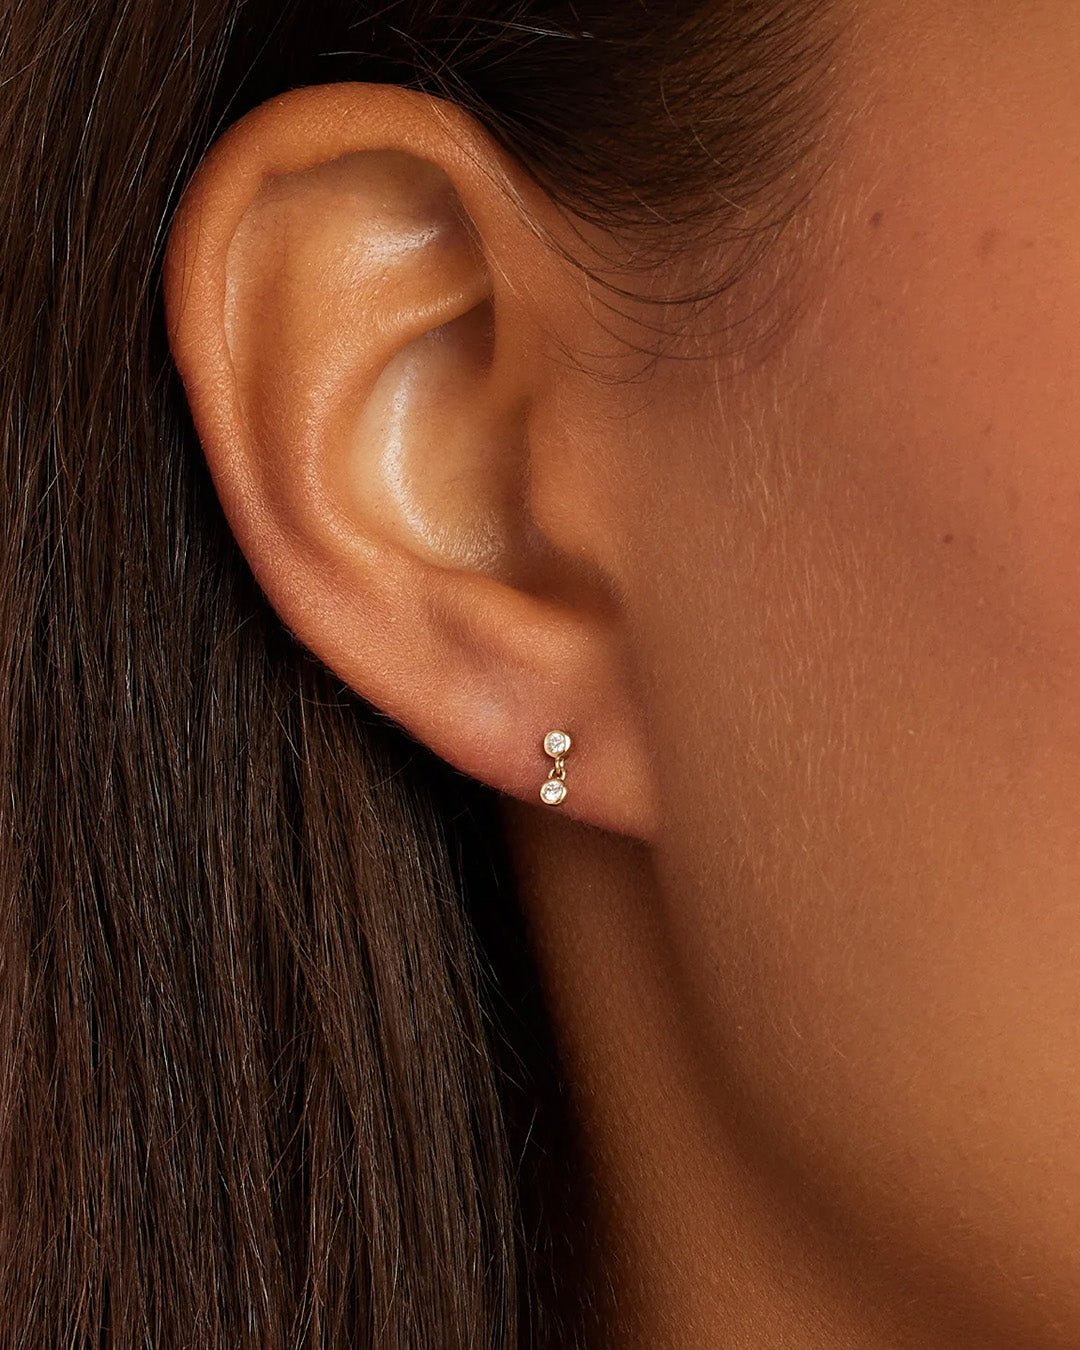 Classic Diamond Studs Earring in 14K Solid Gold/Pair, Women's by Gorjana